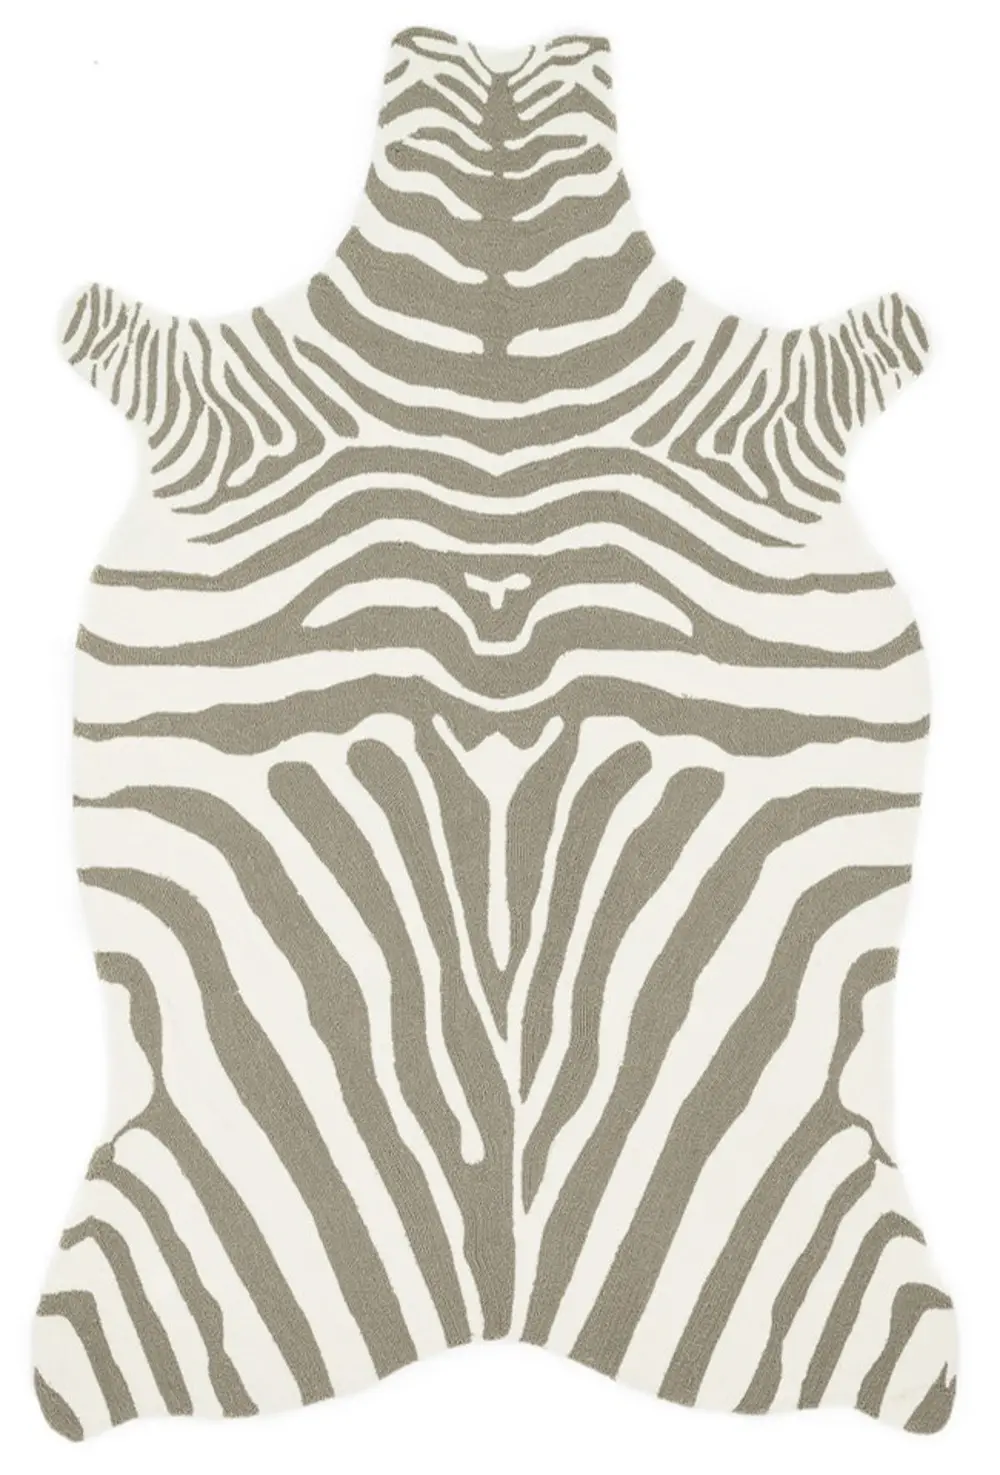 ZD-01/GREYWHITE 5 x 8 Medium Zebra Print Gray & White Indoor-Outdoor Rug - Zadie Shag -1